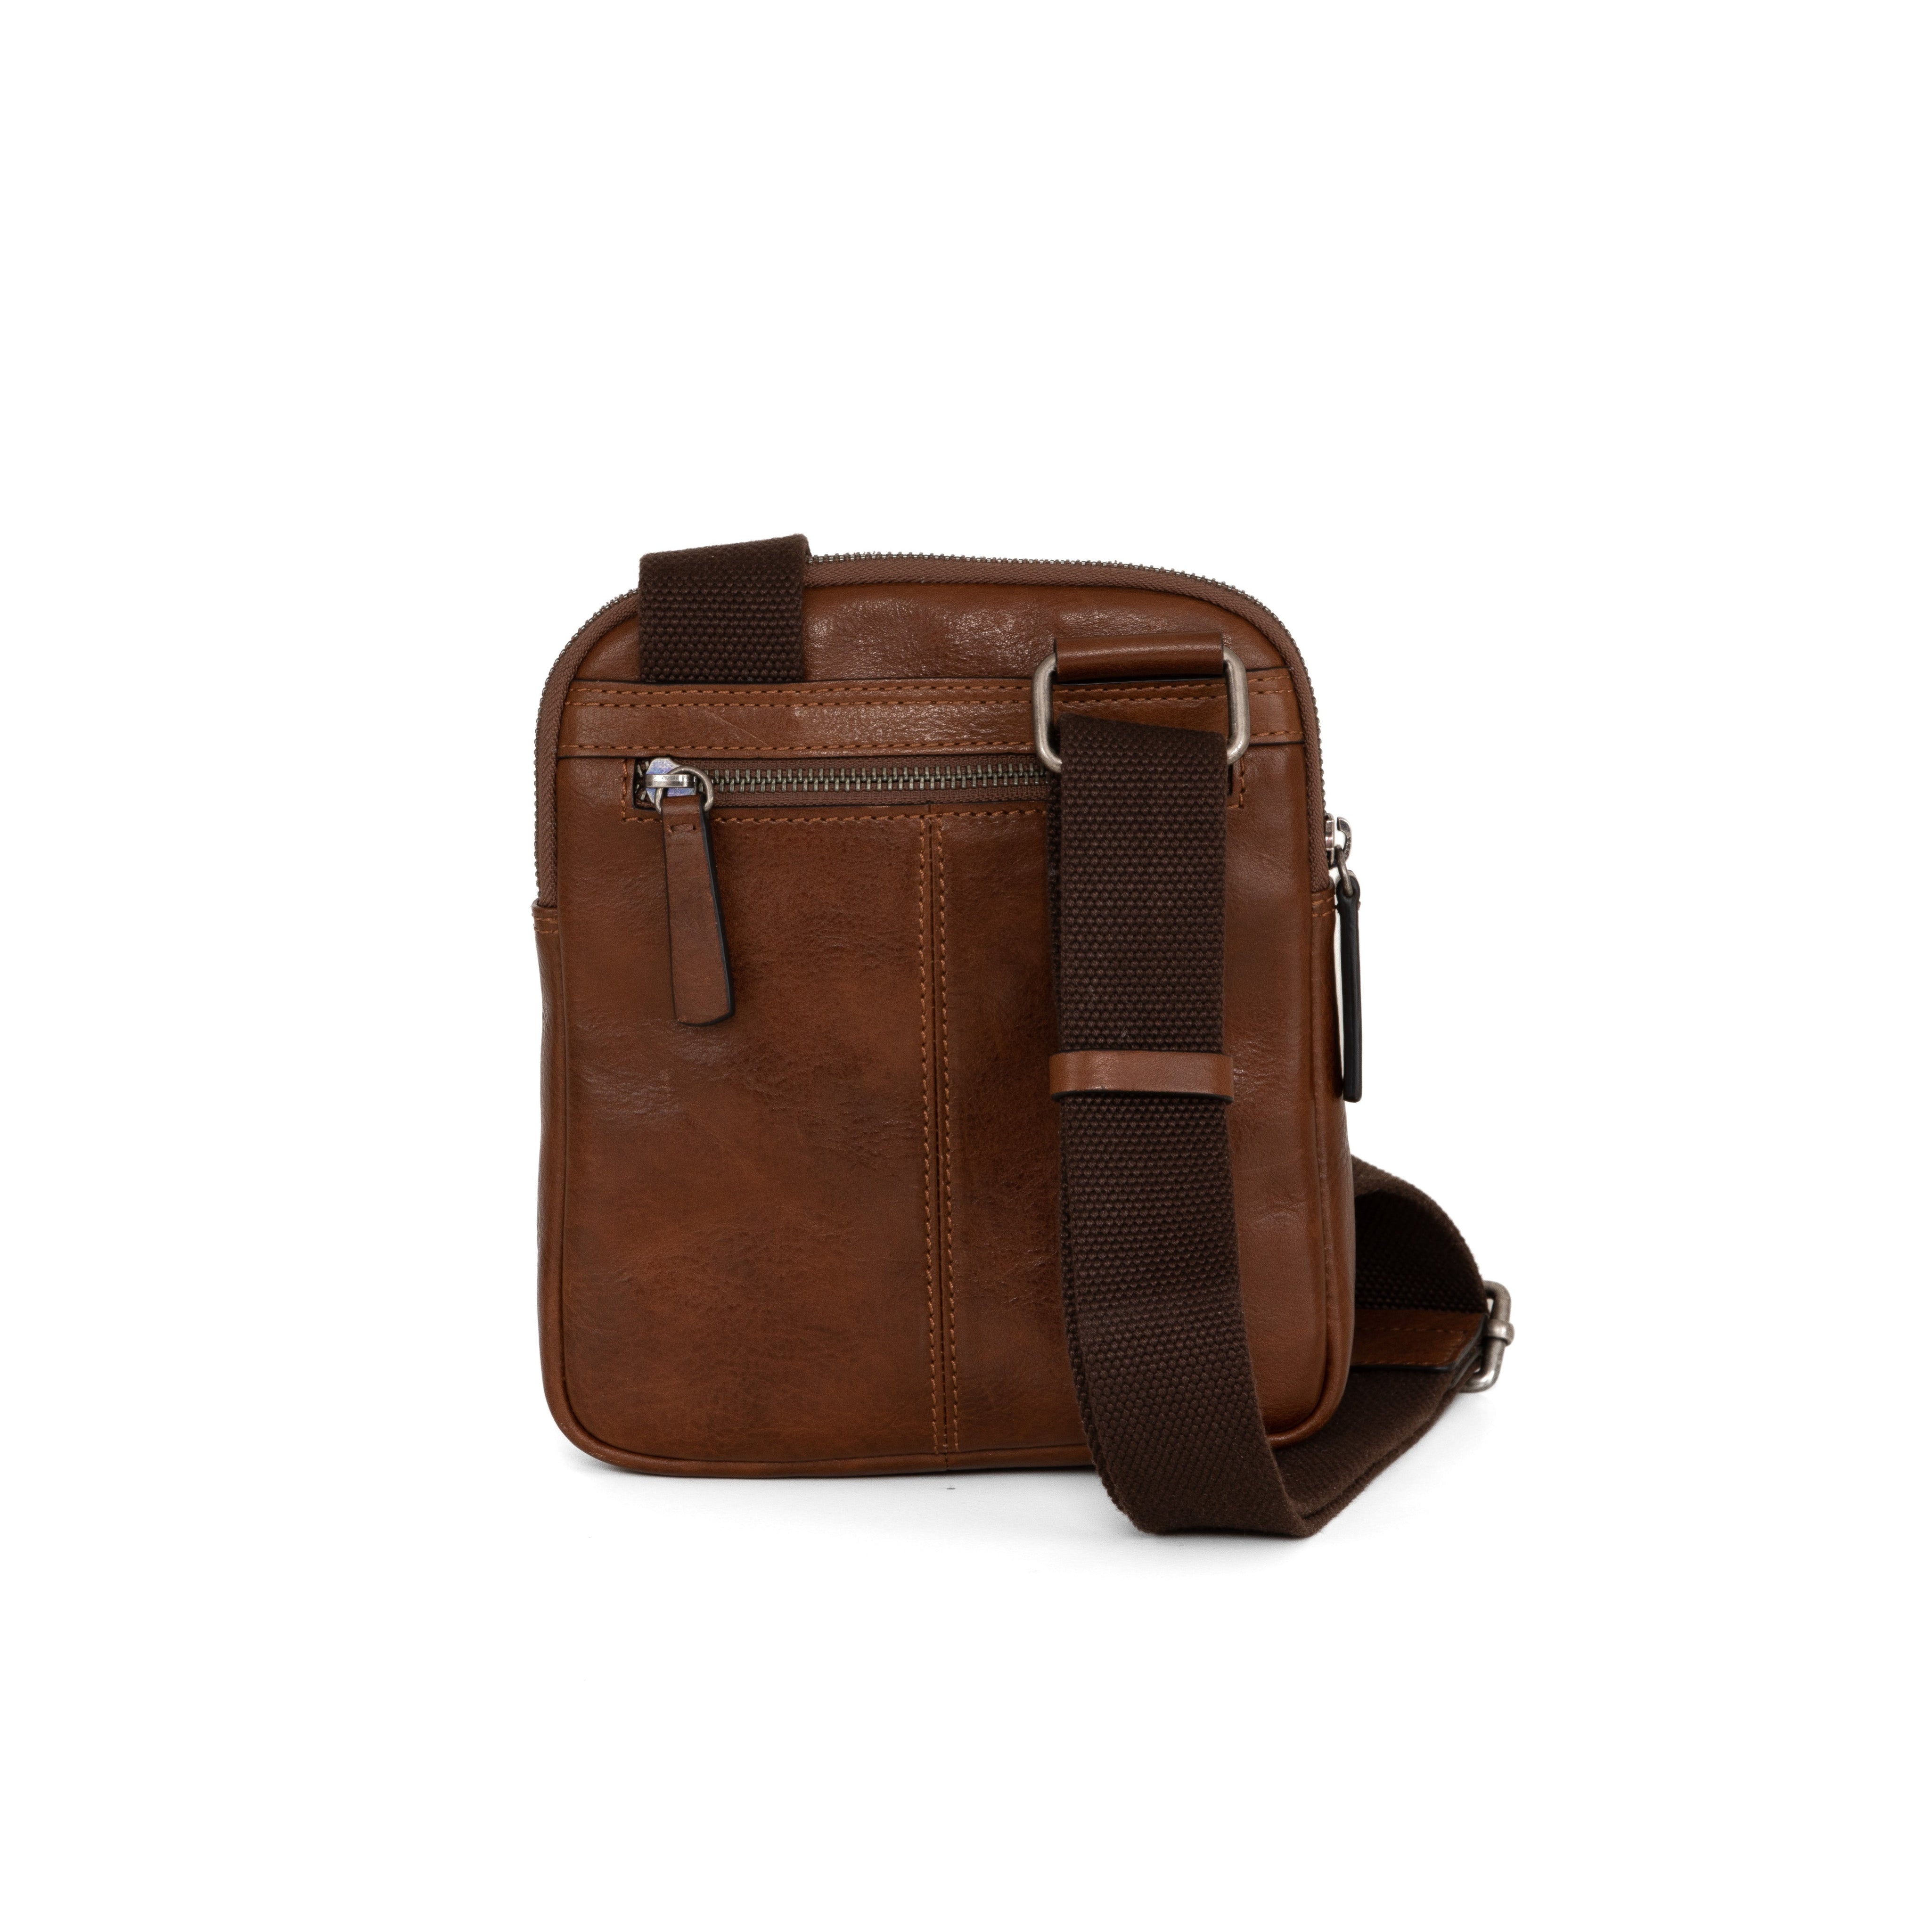 Gianni Conti Mauro Leather Shoulder Bag